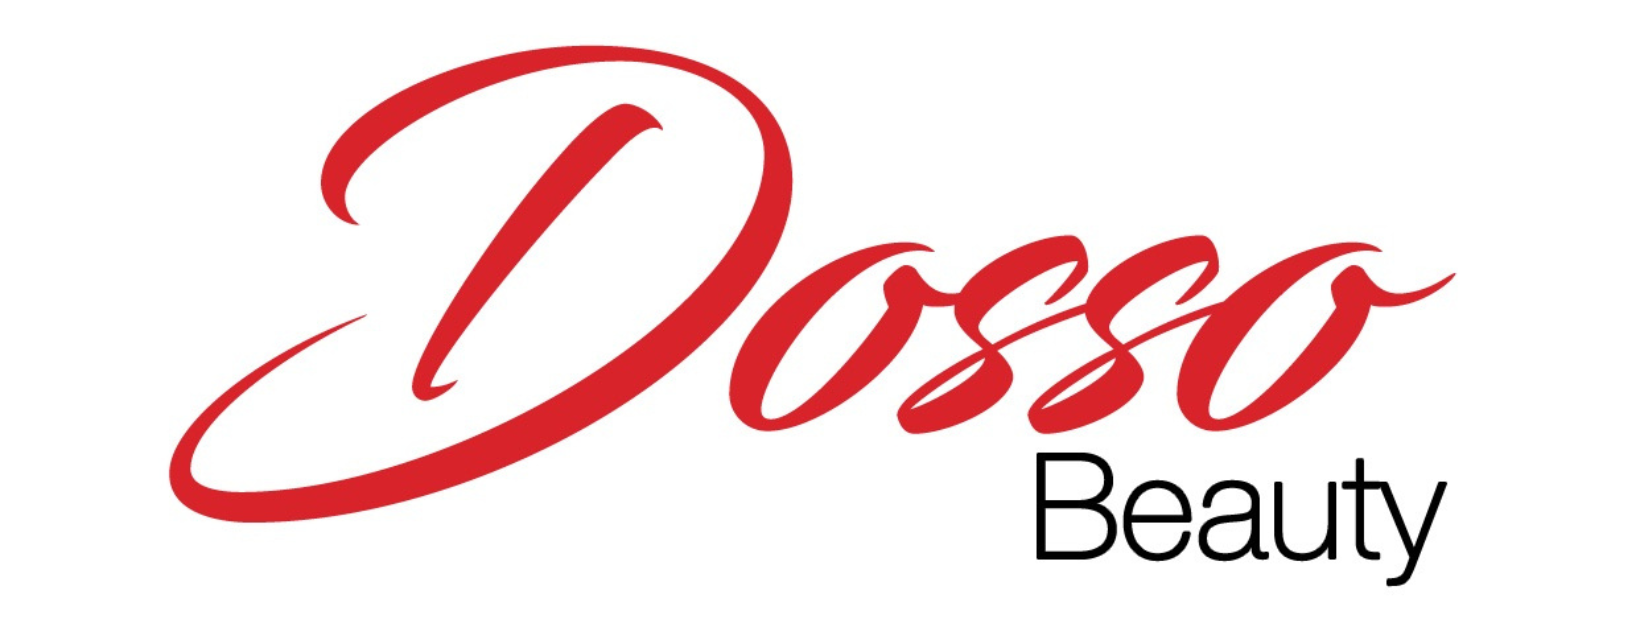 Dosso Beauty logo